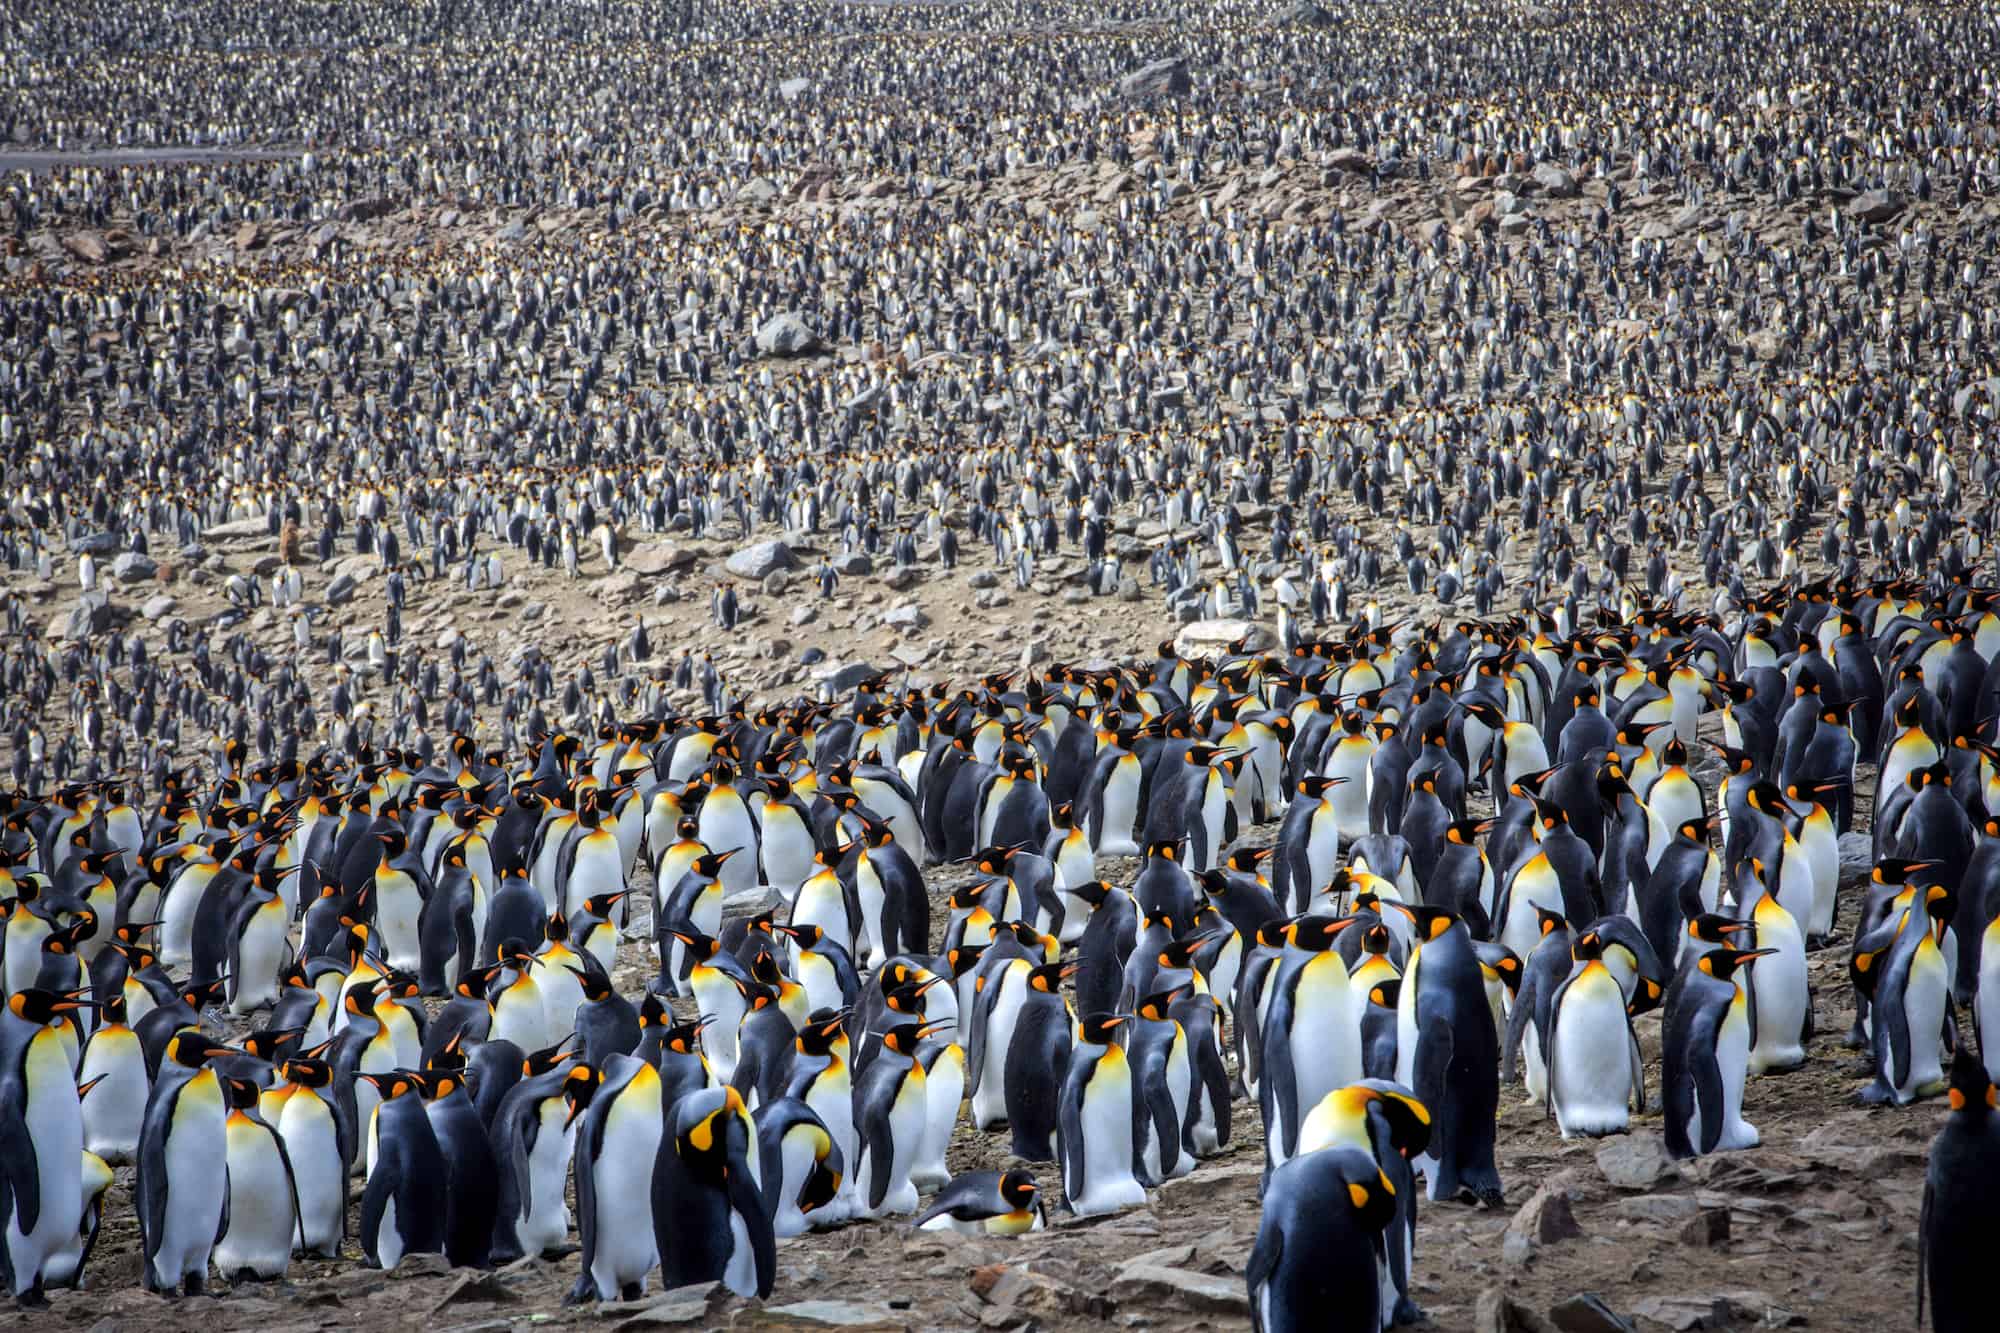 penguins of Antarctica